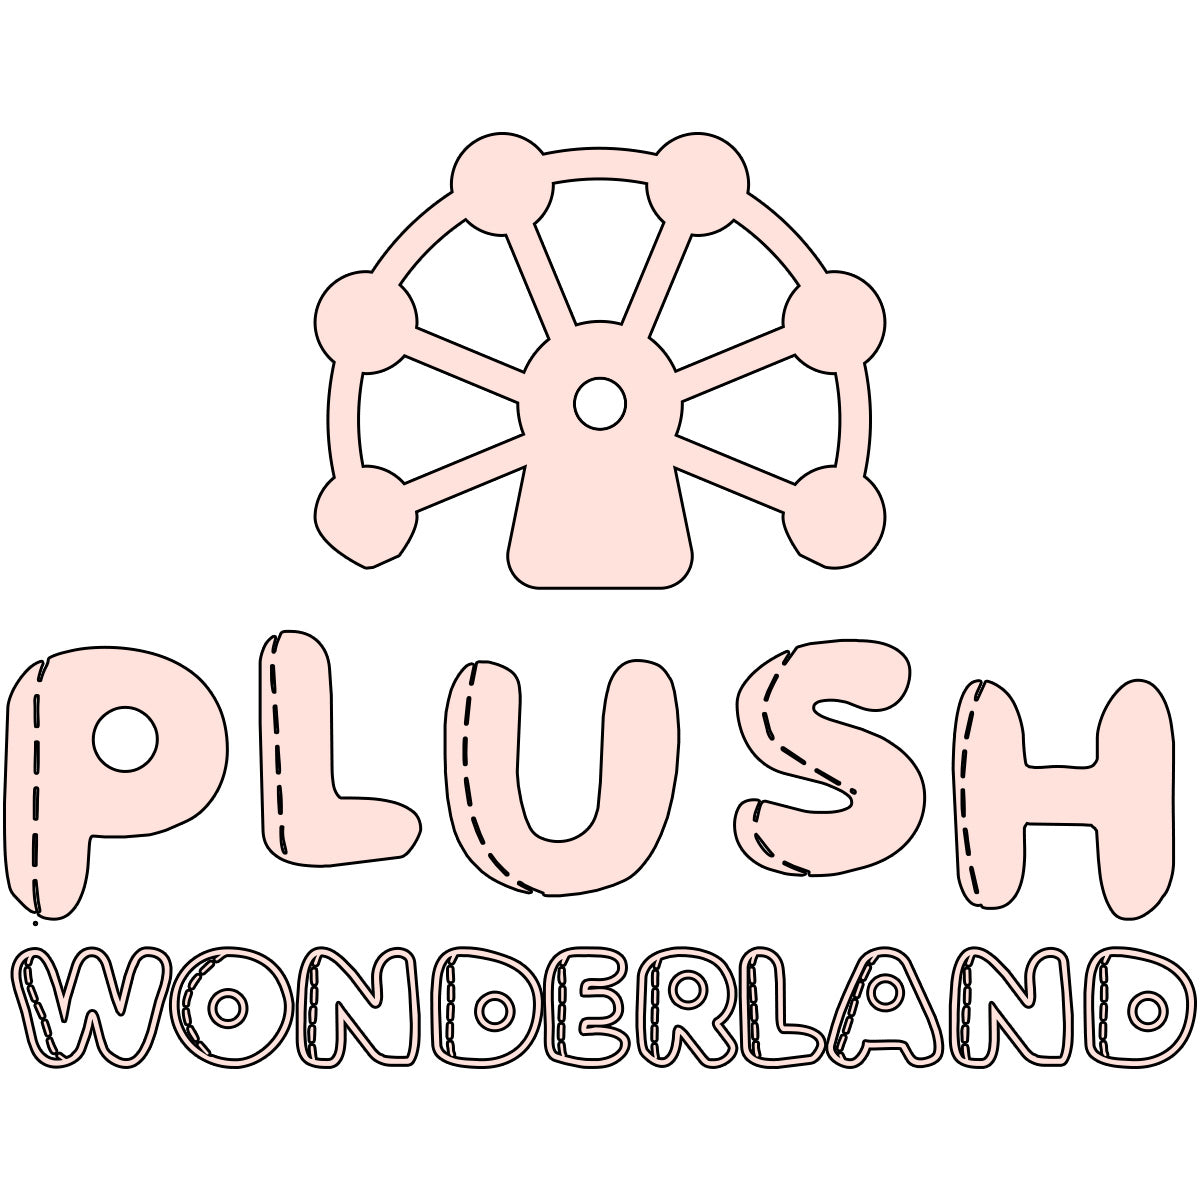 Plush Wonderland-High Quality Anime/Game/TV/Idol Plushs For Sale –  plushwonderland